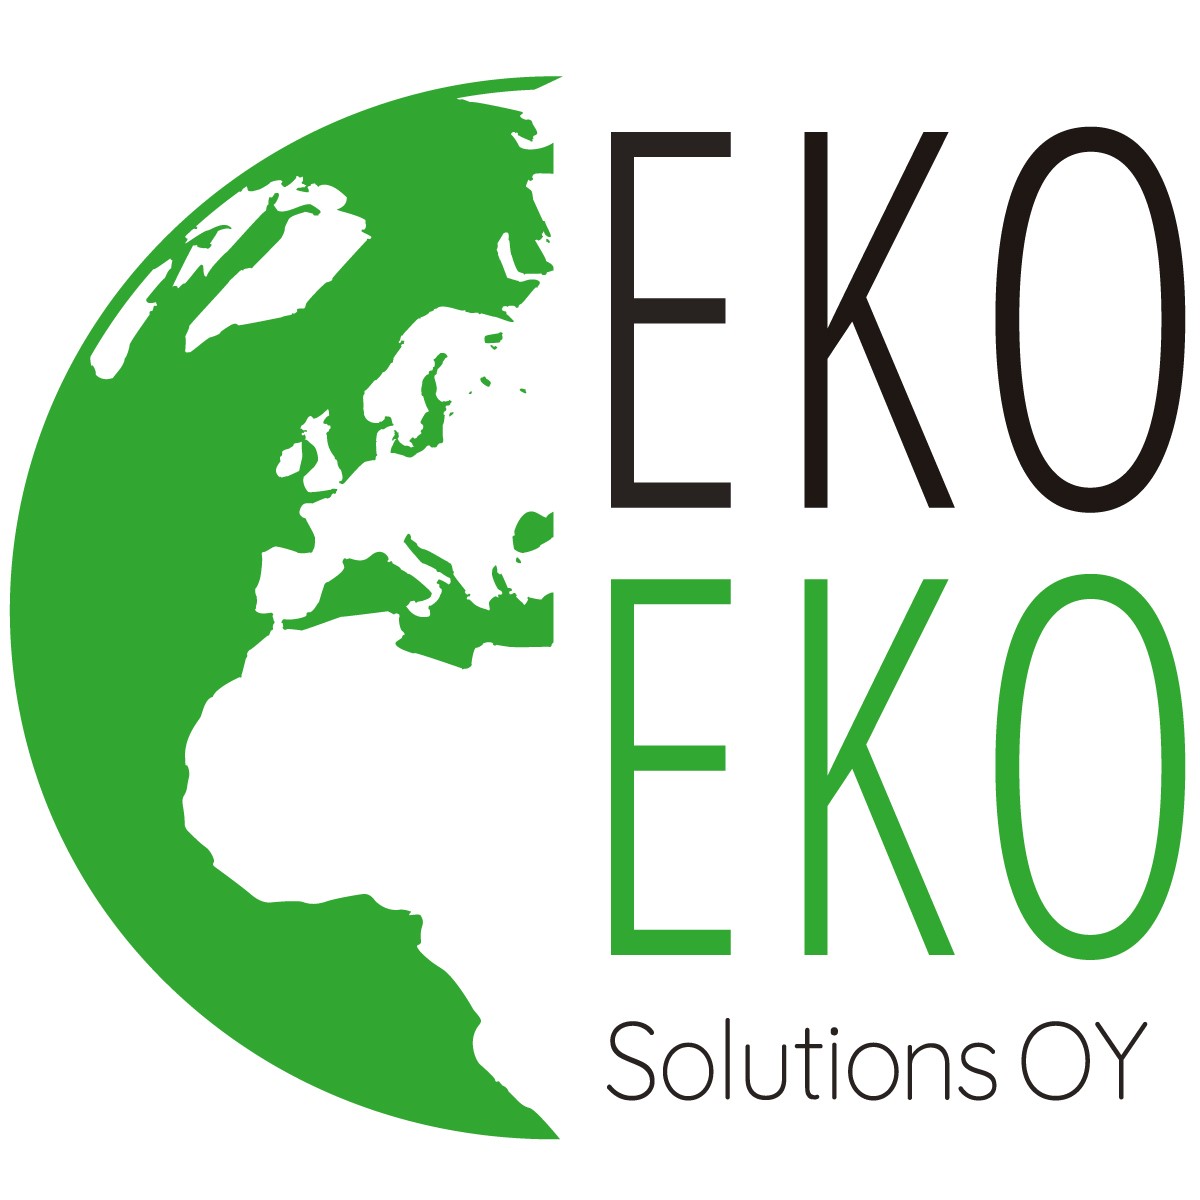 Eko Eko - Ekological and Ekonomical Solutions Oy